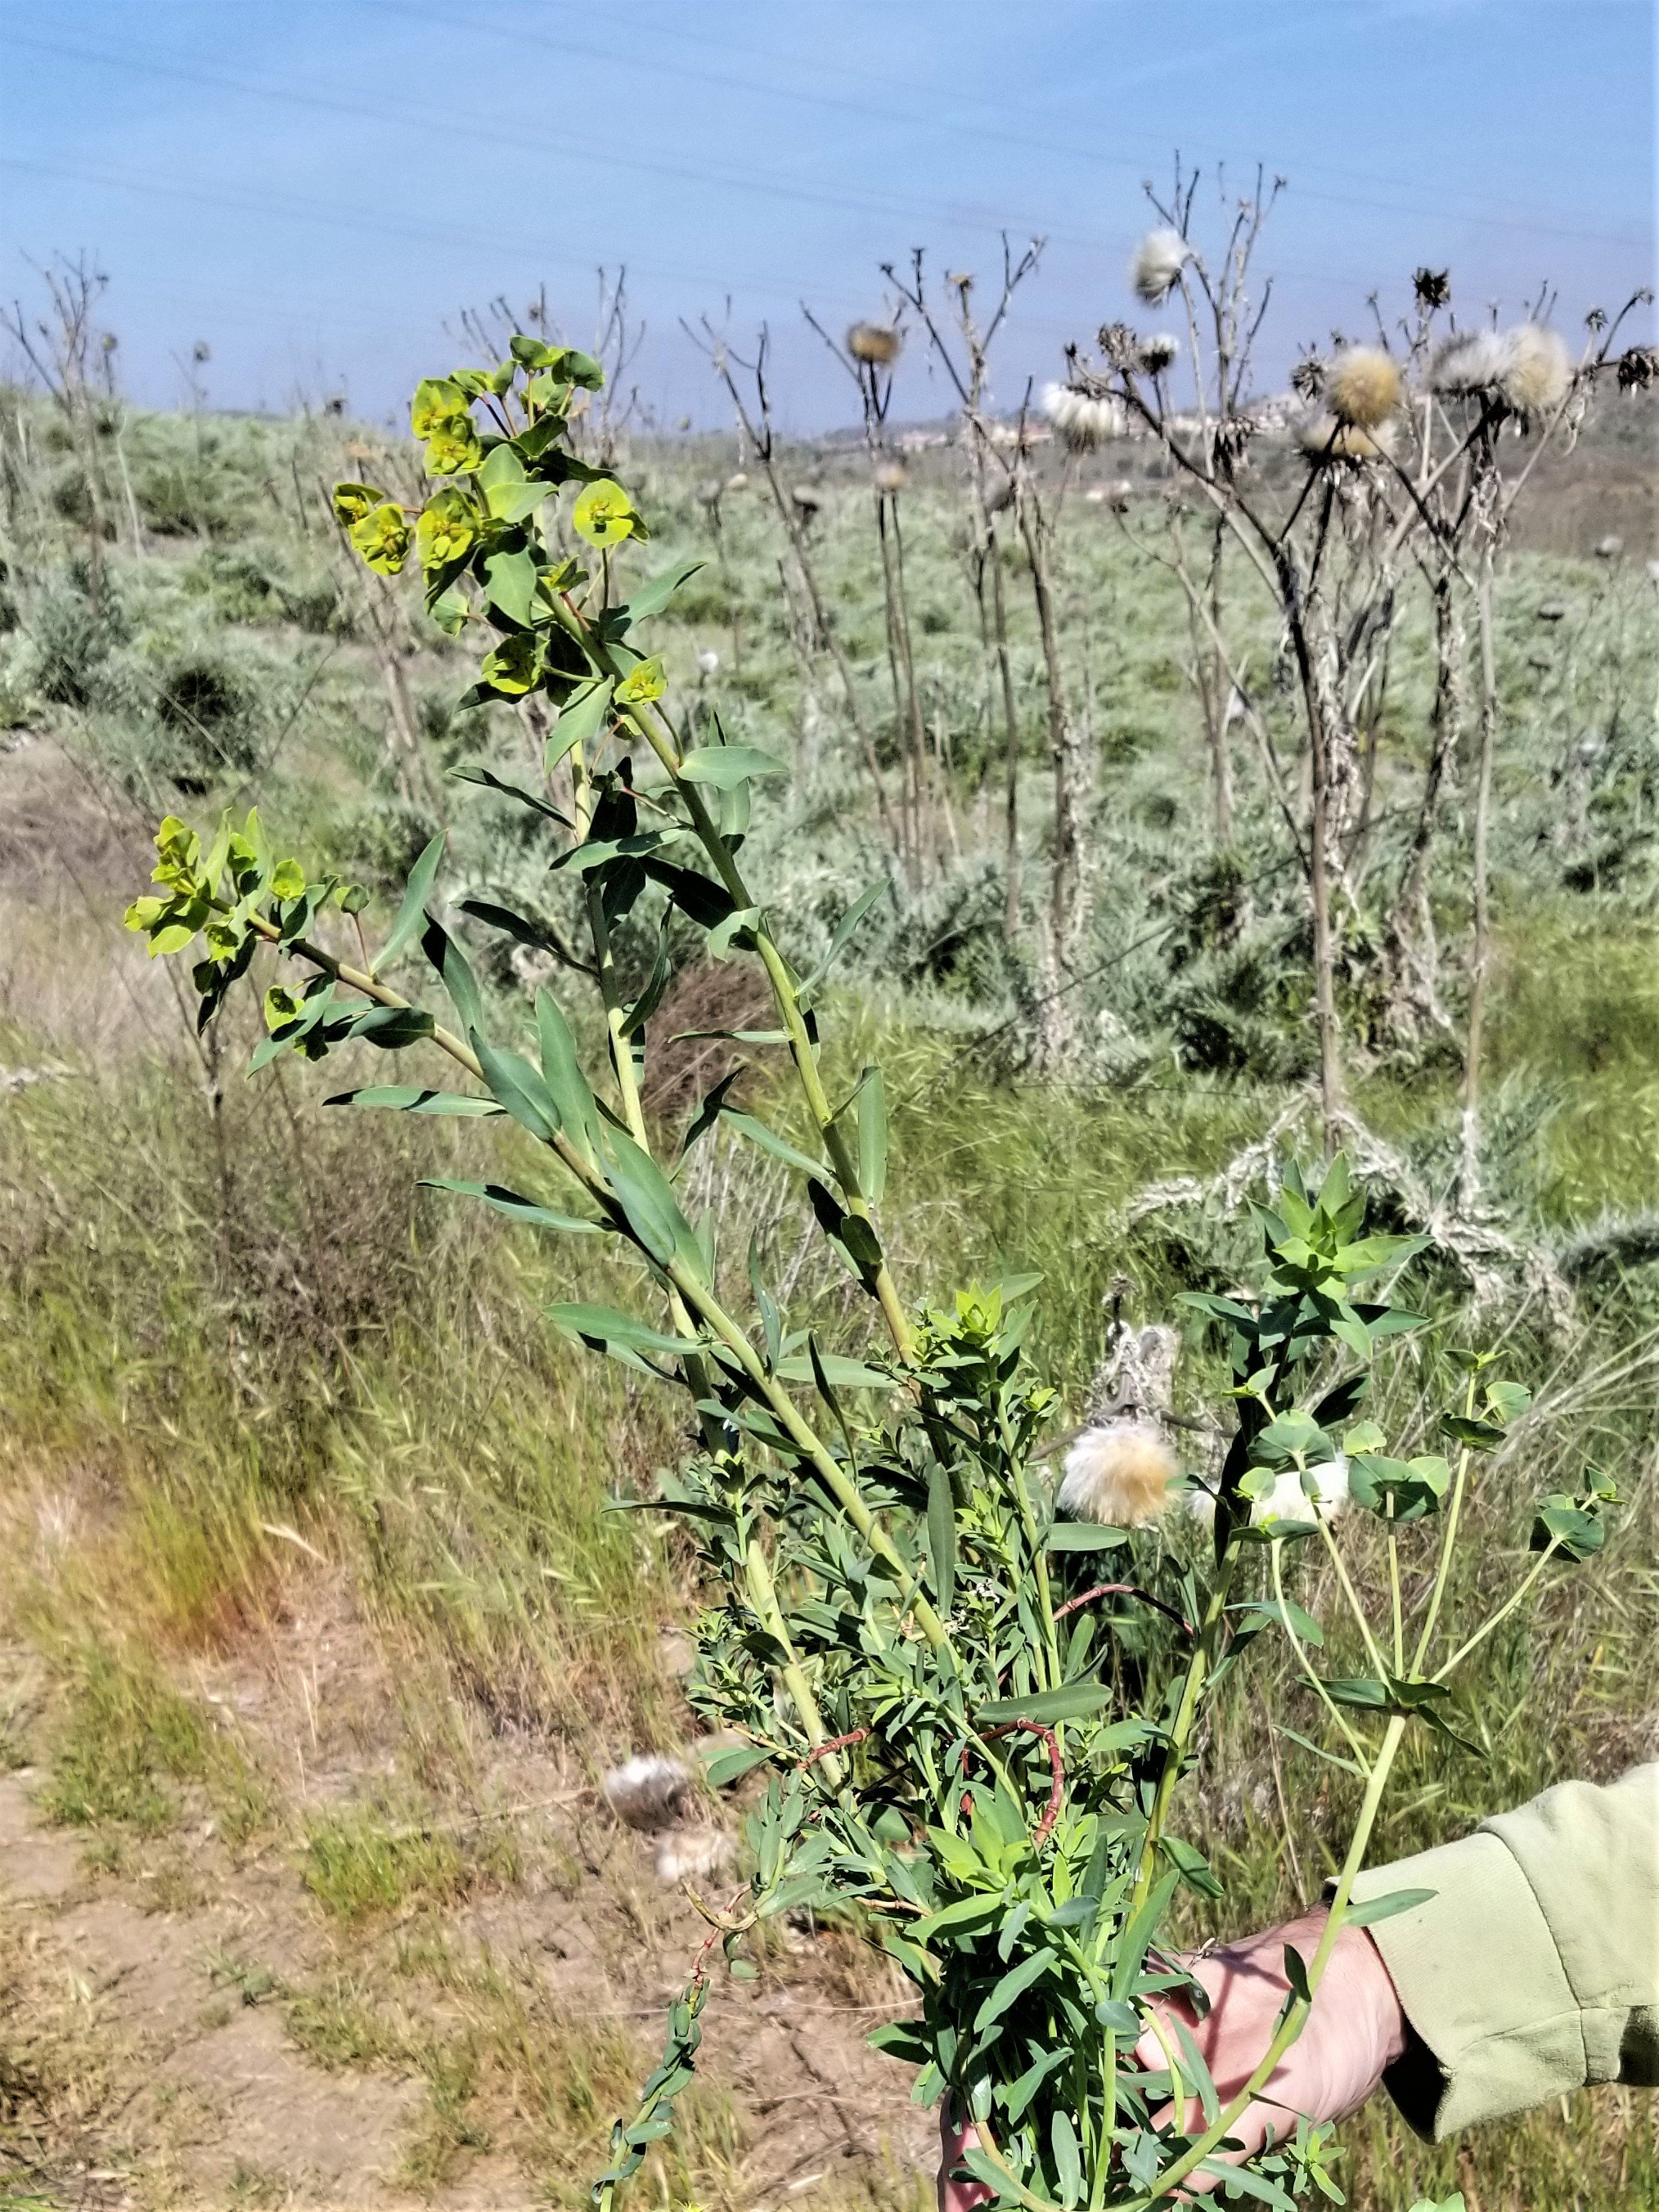 Carnation spurge (Euphorbia terracina) is one of our target invasive species